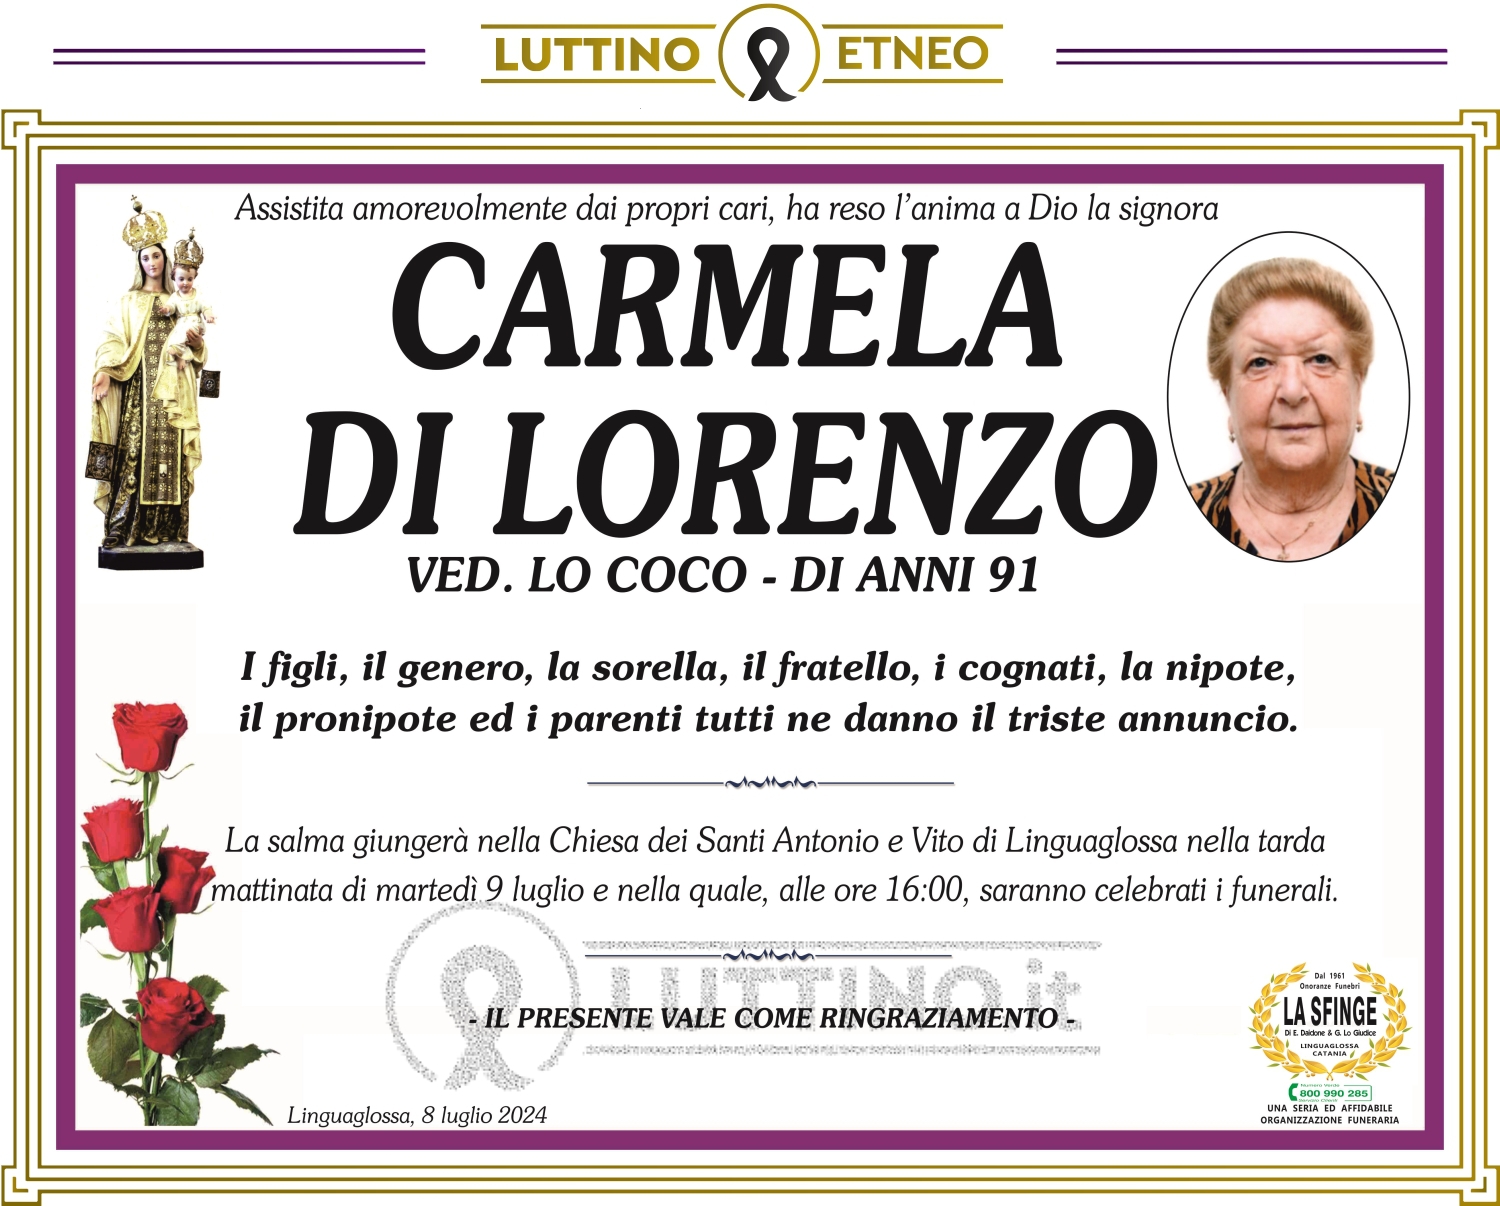 Carmela Di Lorenzo